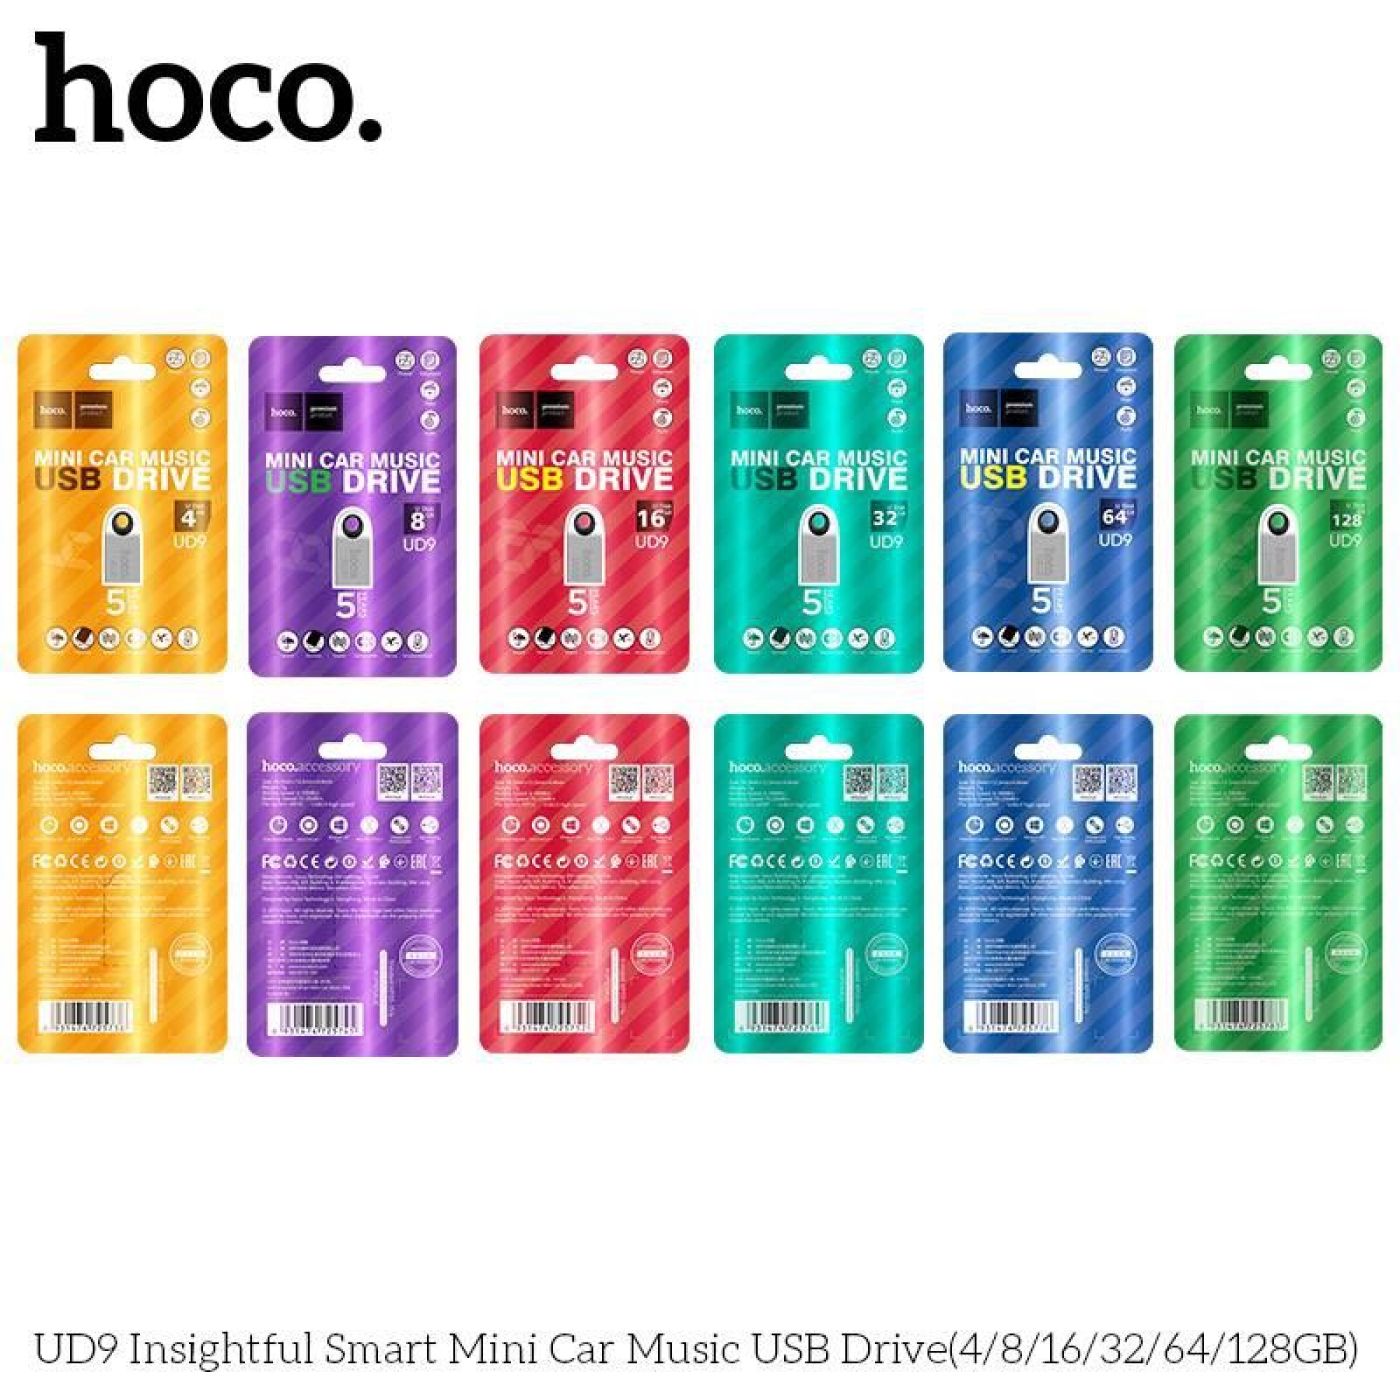 USB 2.0 HOCO UD9 - 32GB